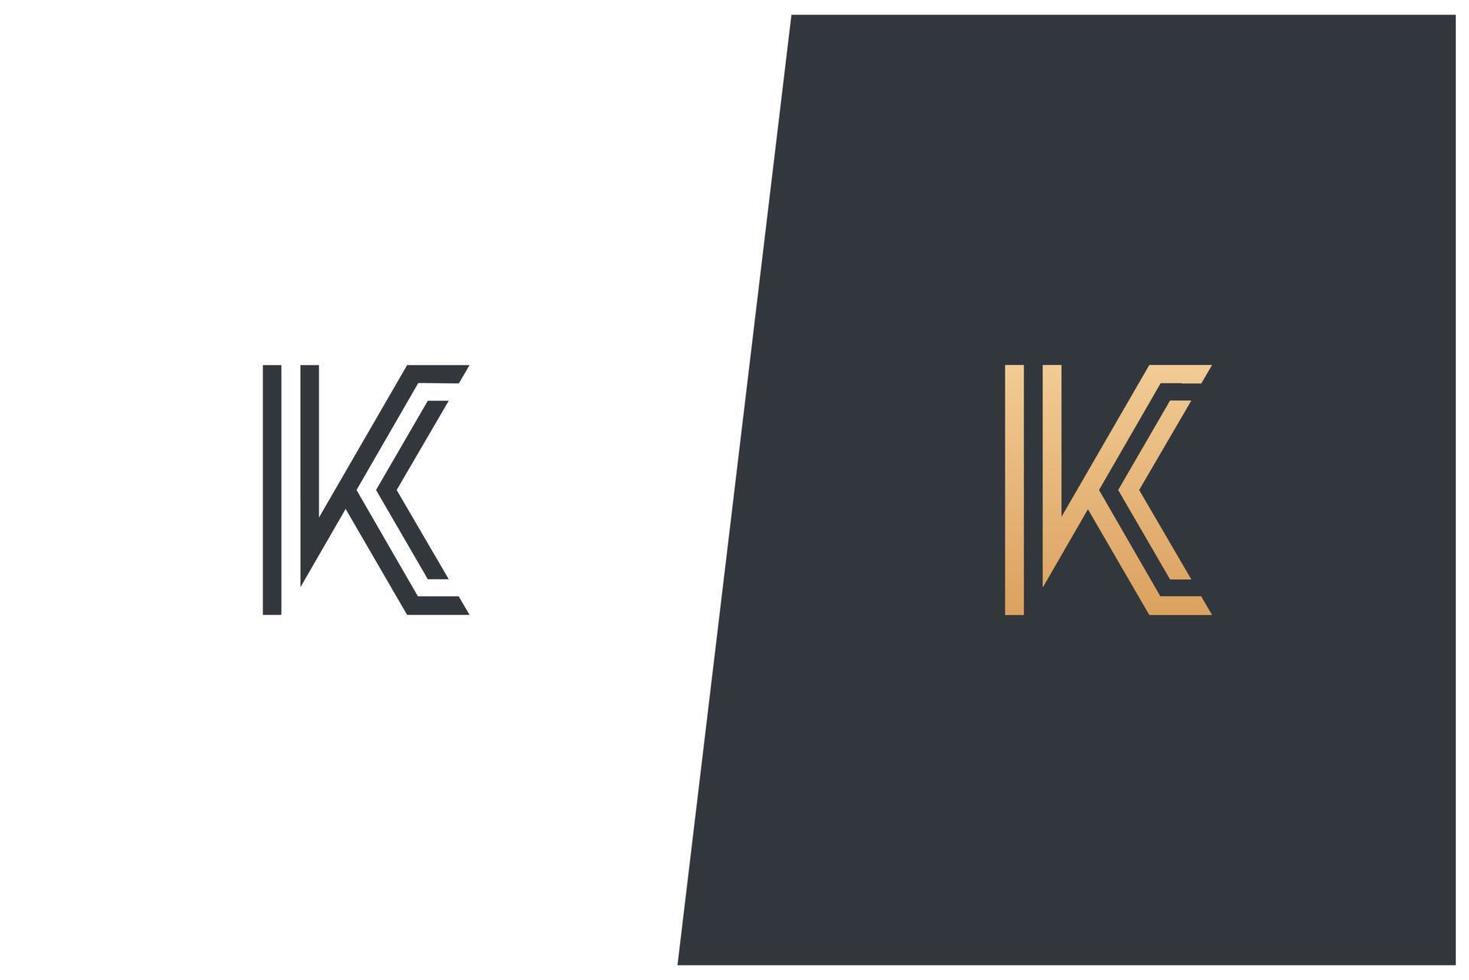 k Brief Logo Vektor Konzept Symbol Marke. universelle k-Logo-Marke